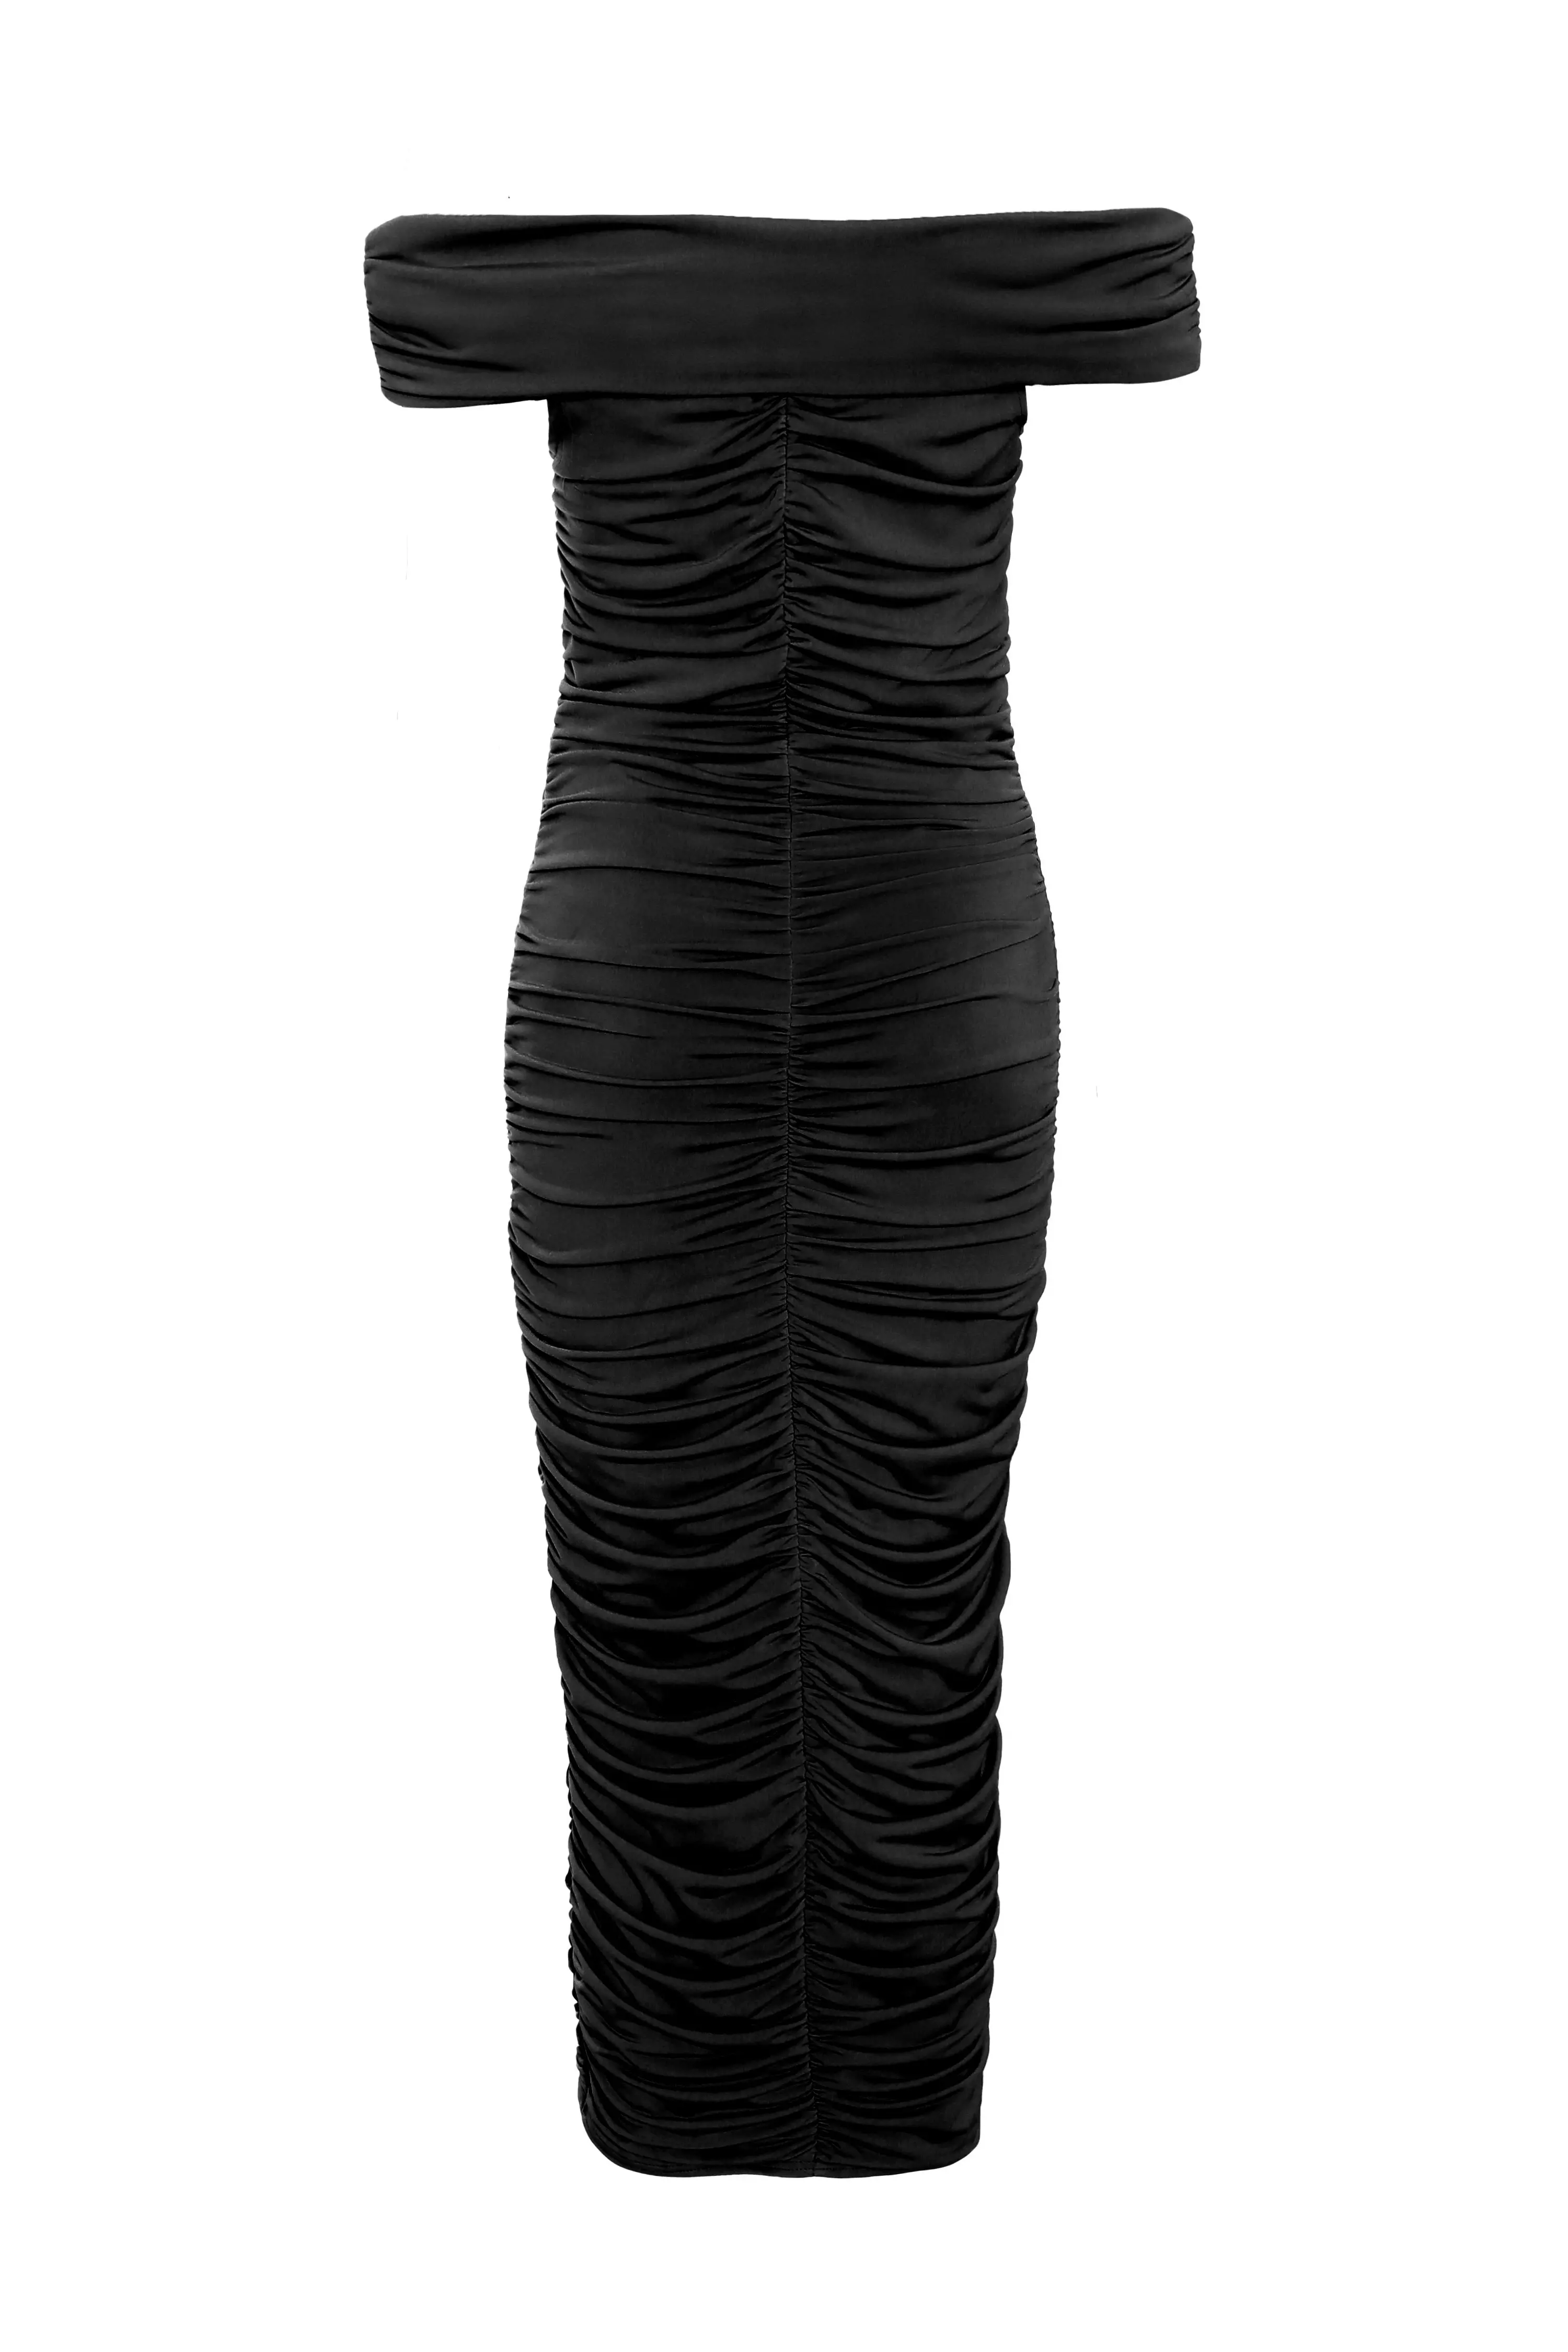 Black Bardot Ruched Midi Dress